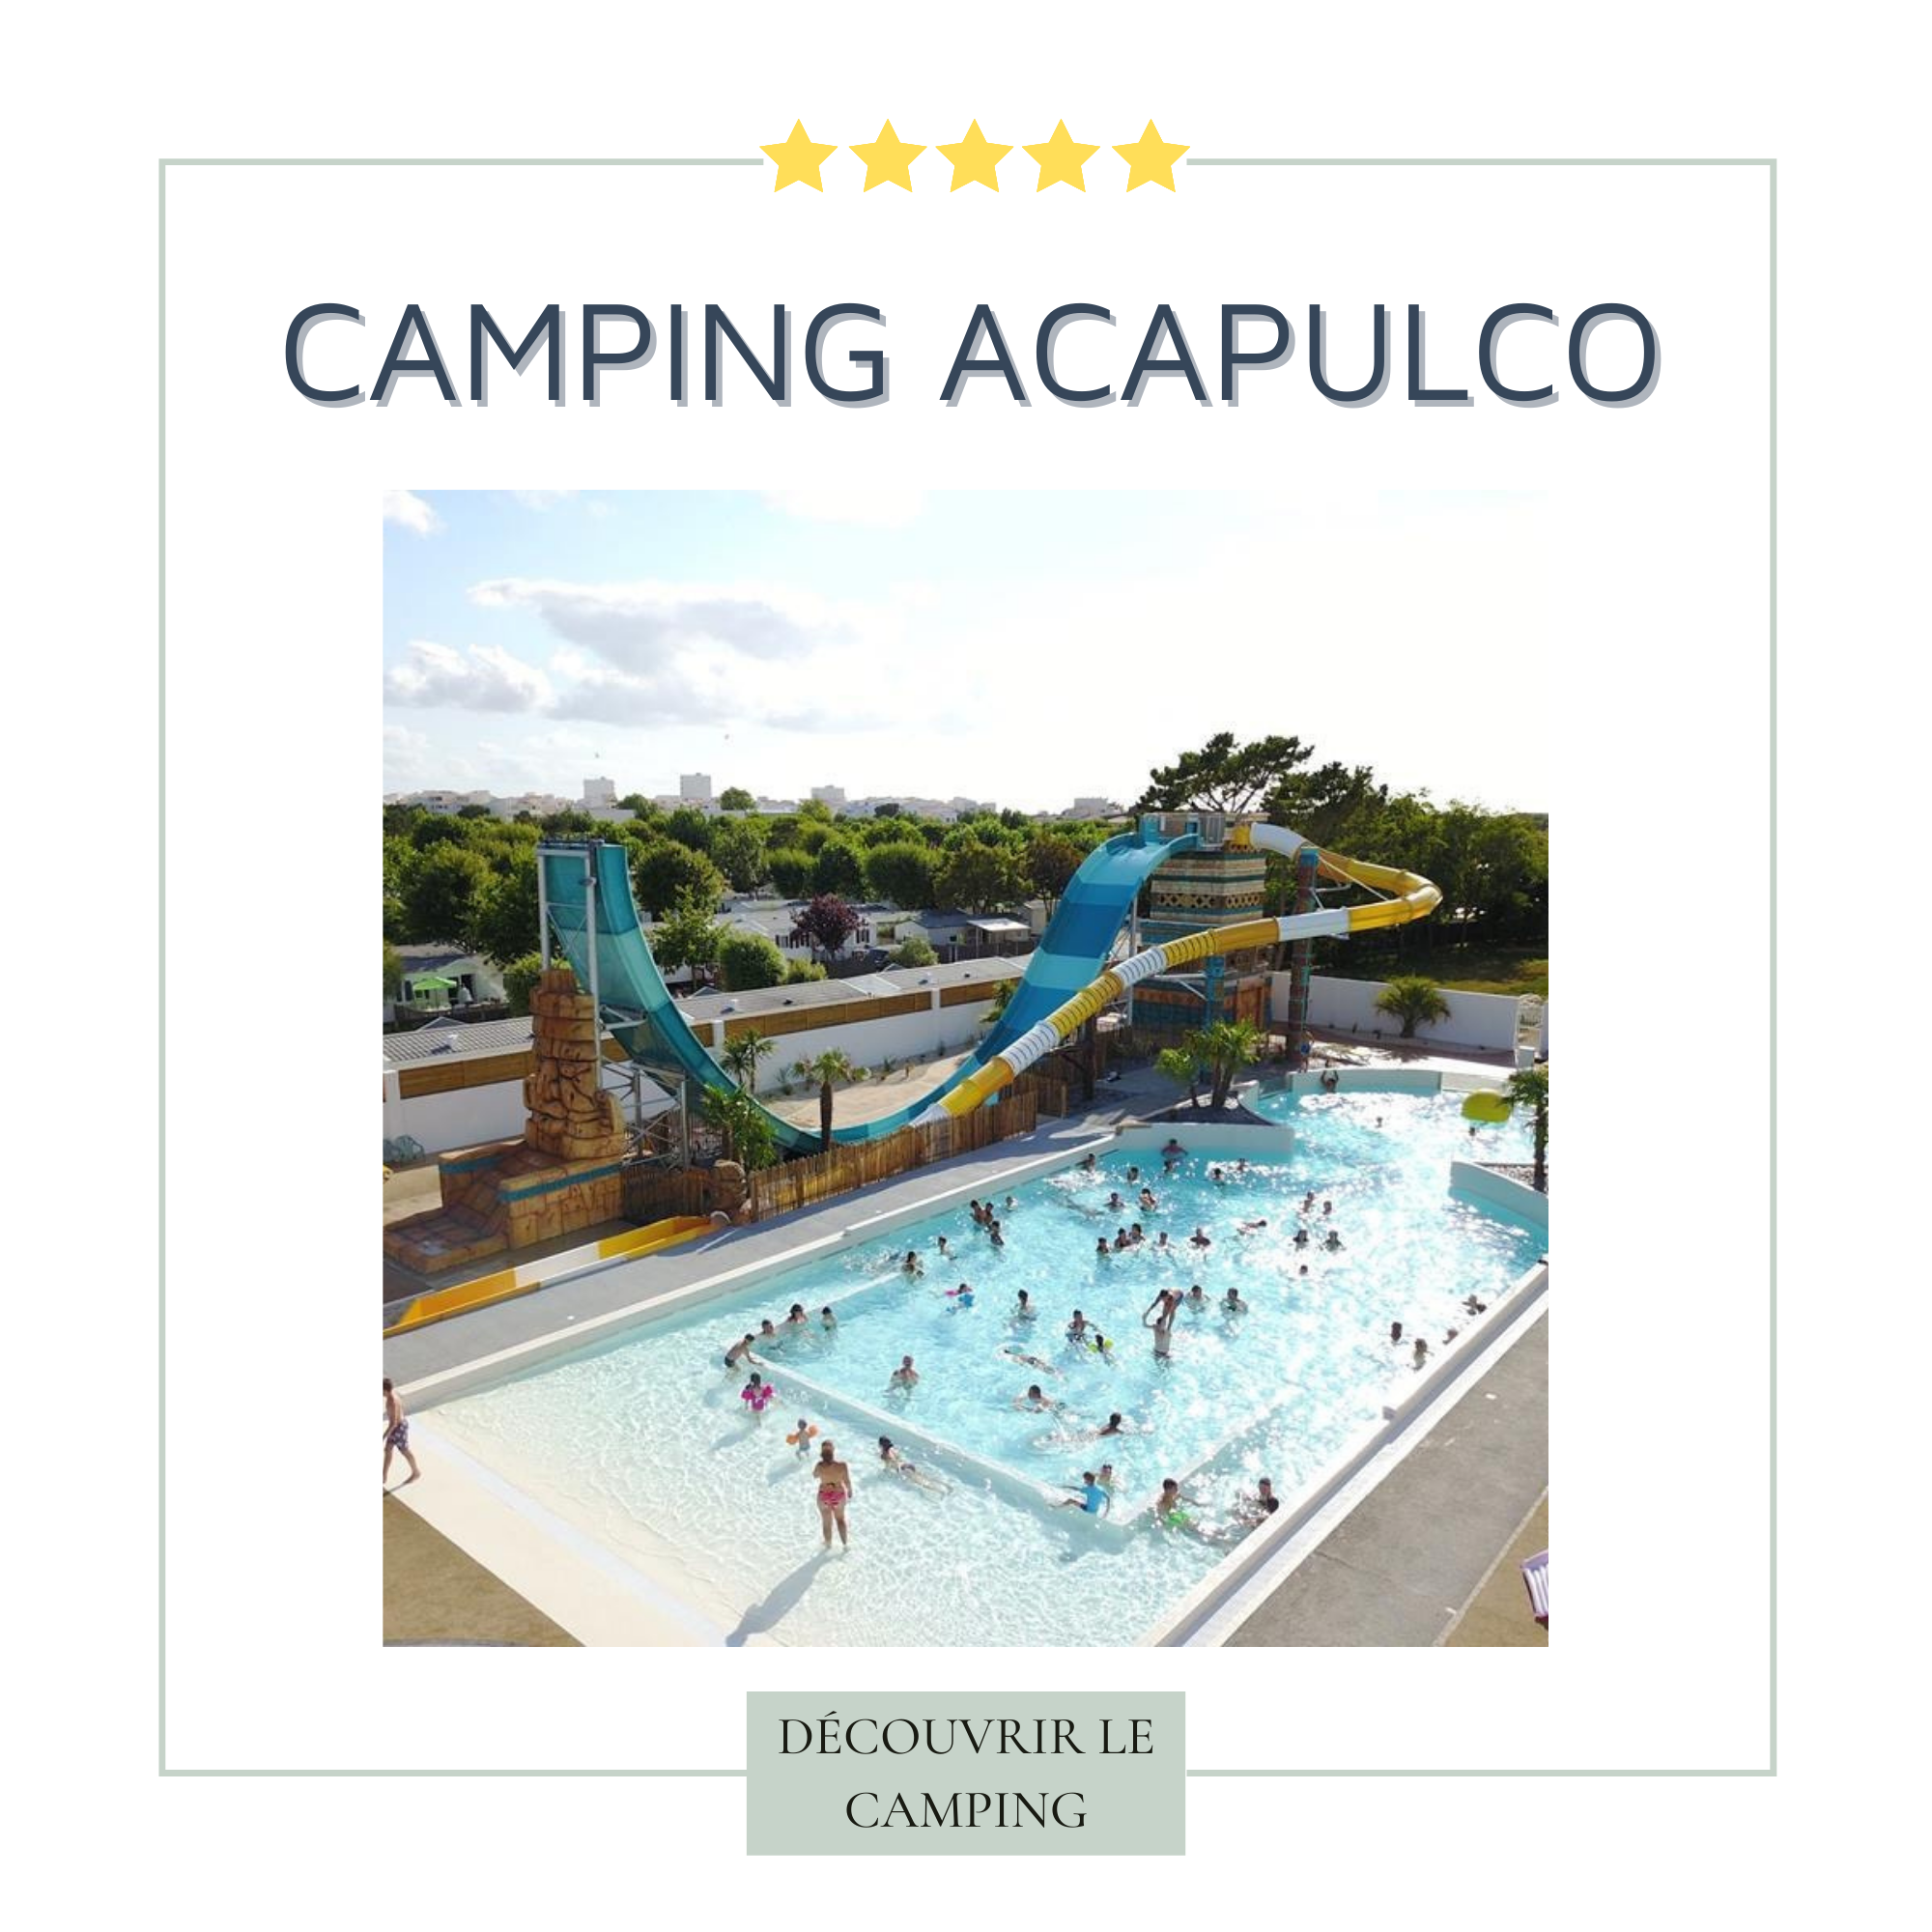 Camping acapulco